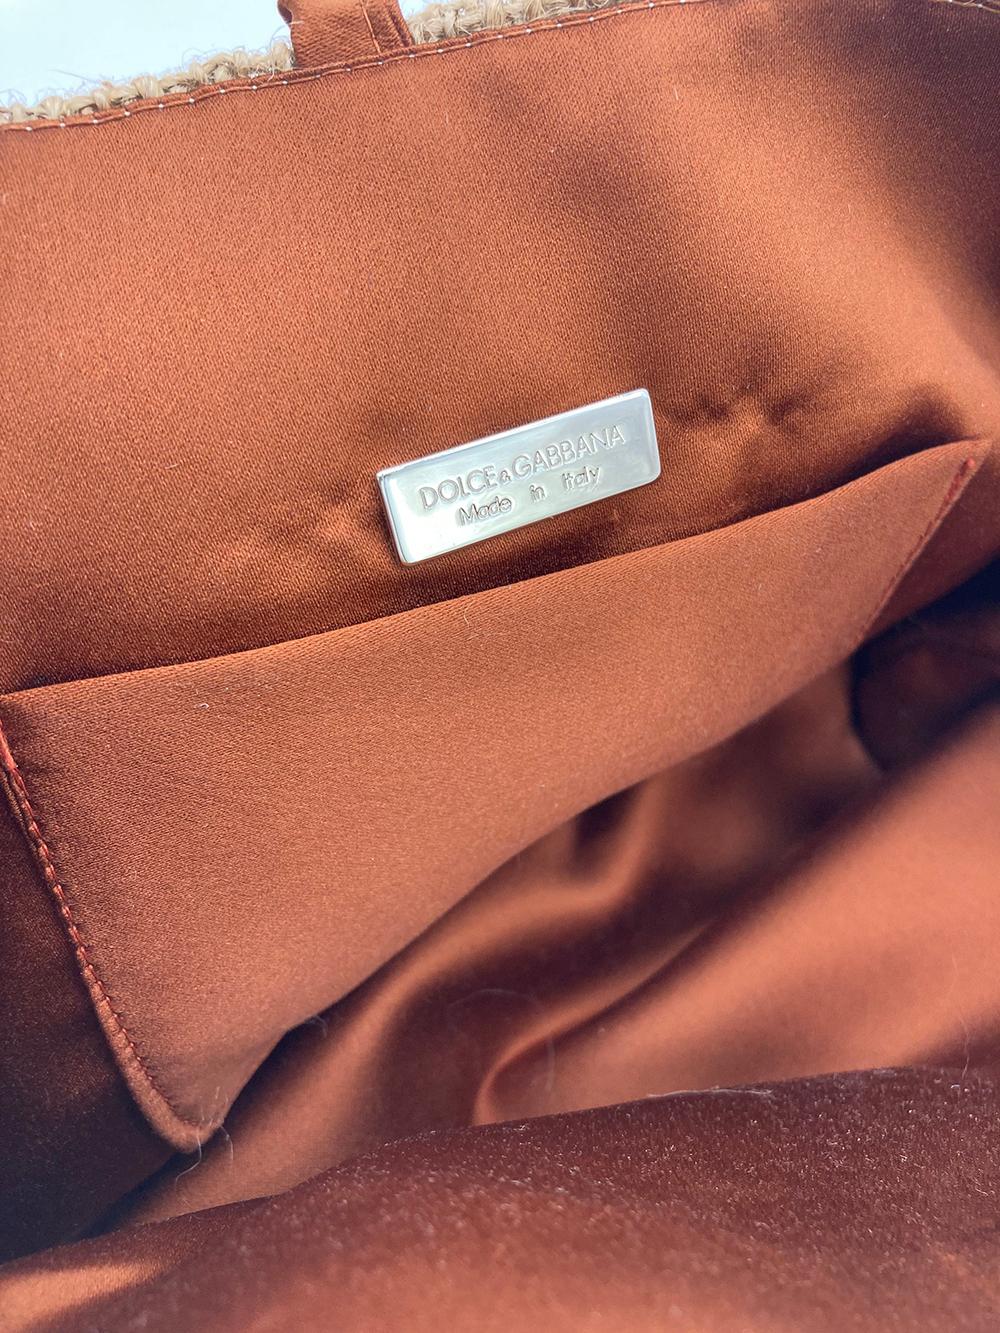 Dolce and Gabbana Crystal Rhinestone Burlap Shoulder Bag For Sale 2